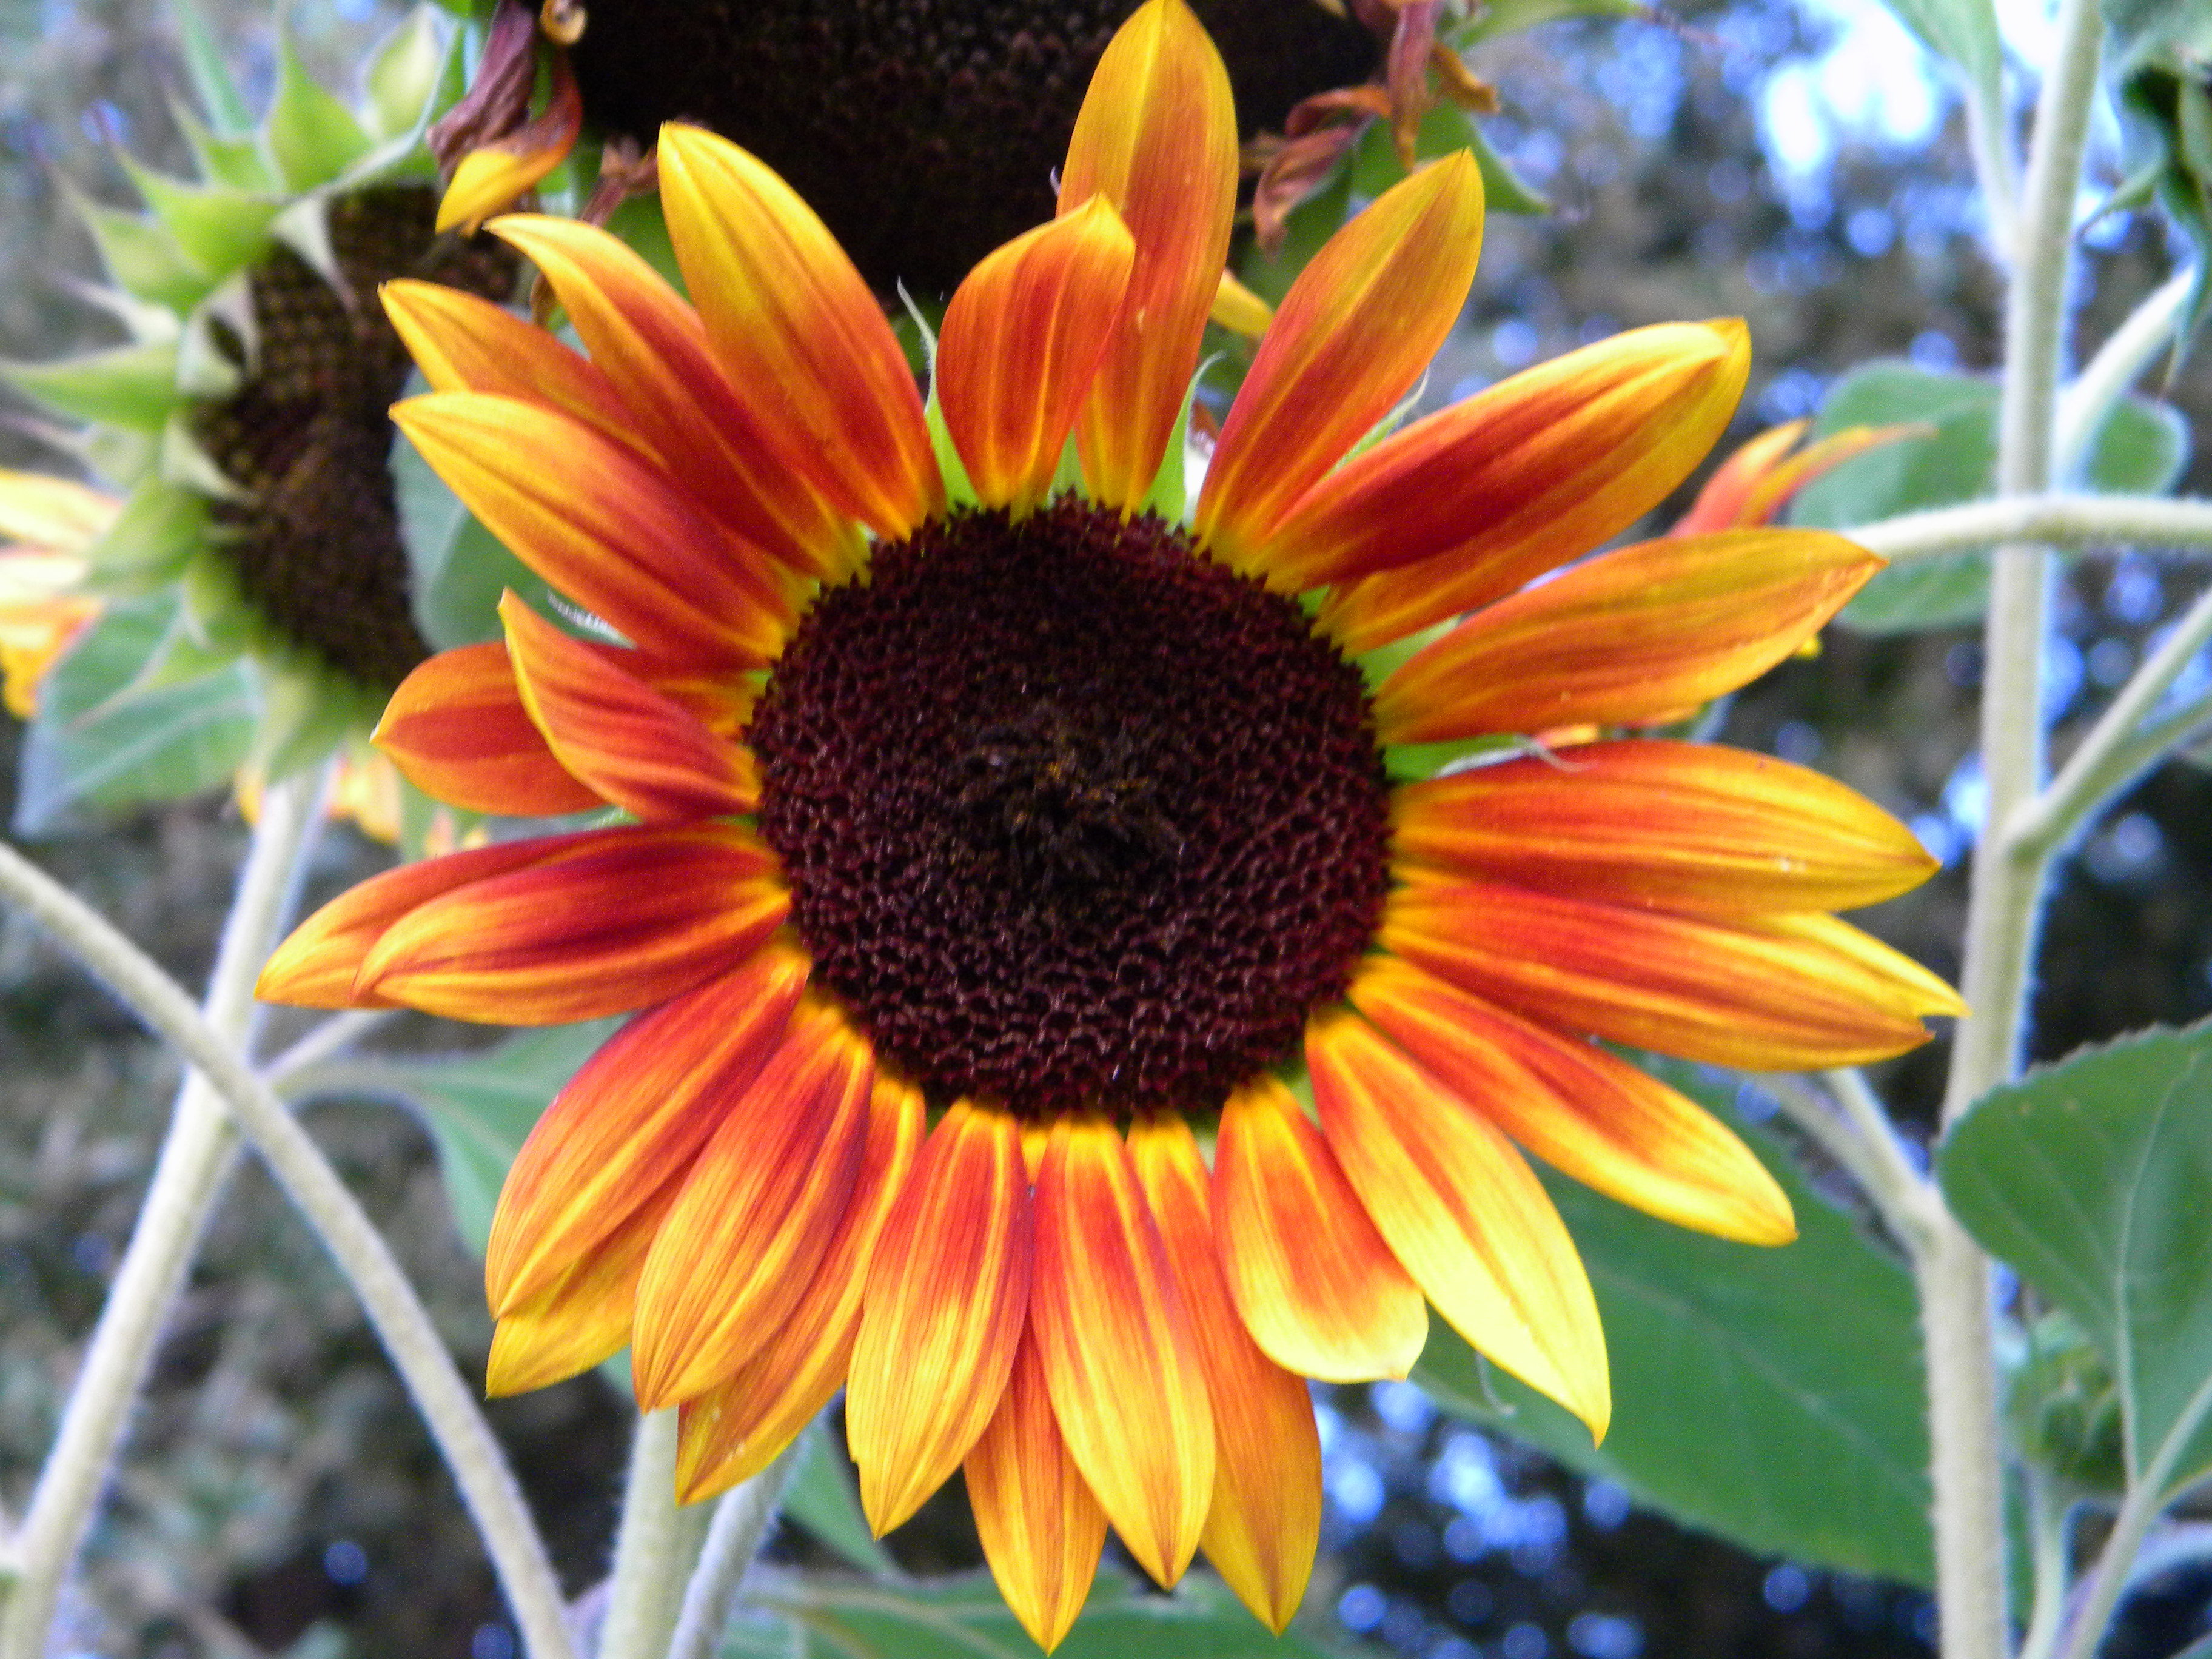 File:Bright sunflower 2009.JPG - Wikipedia